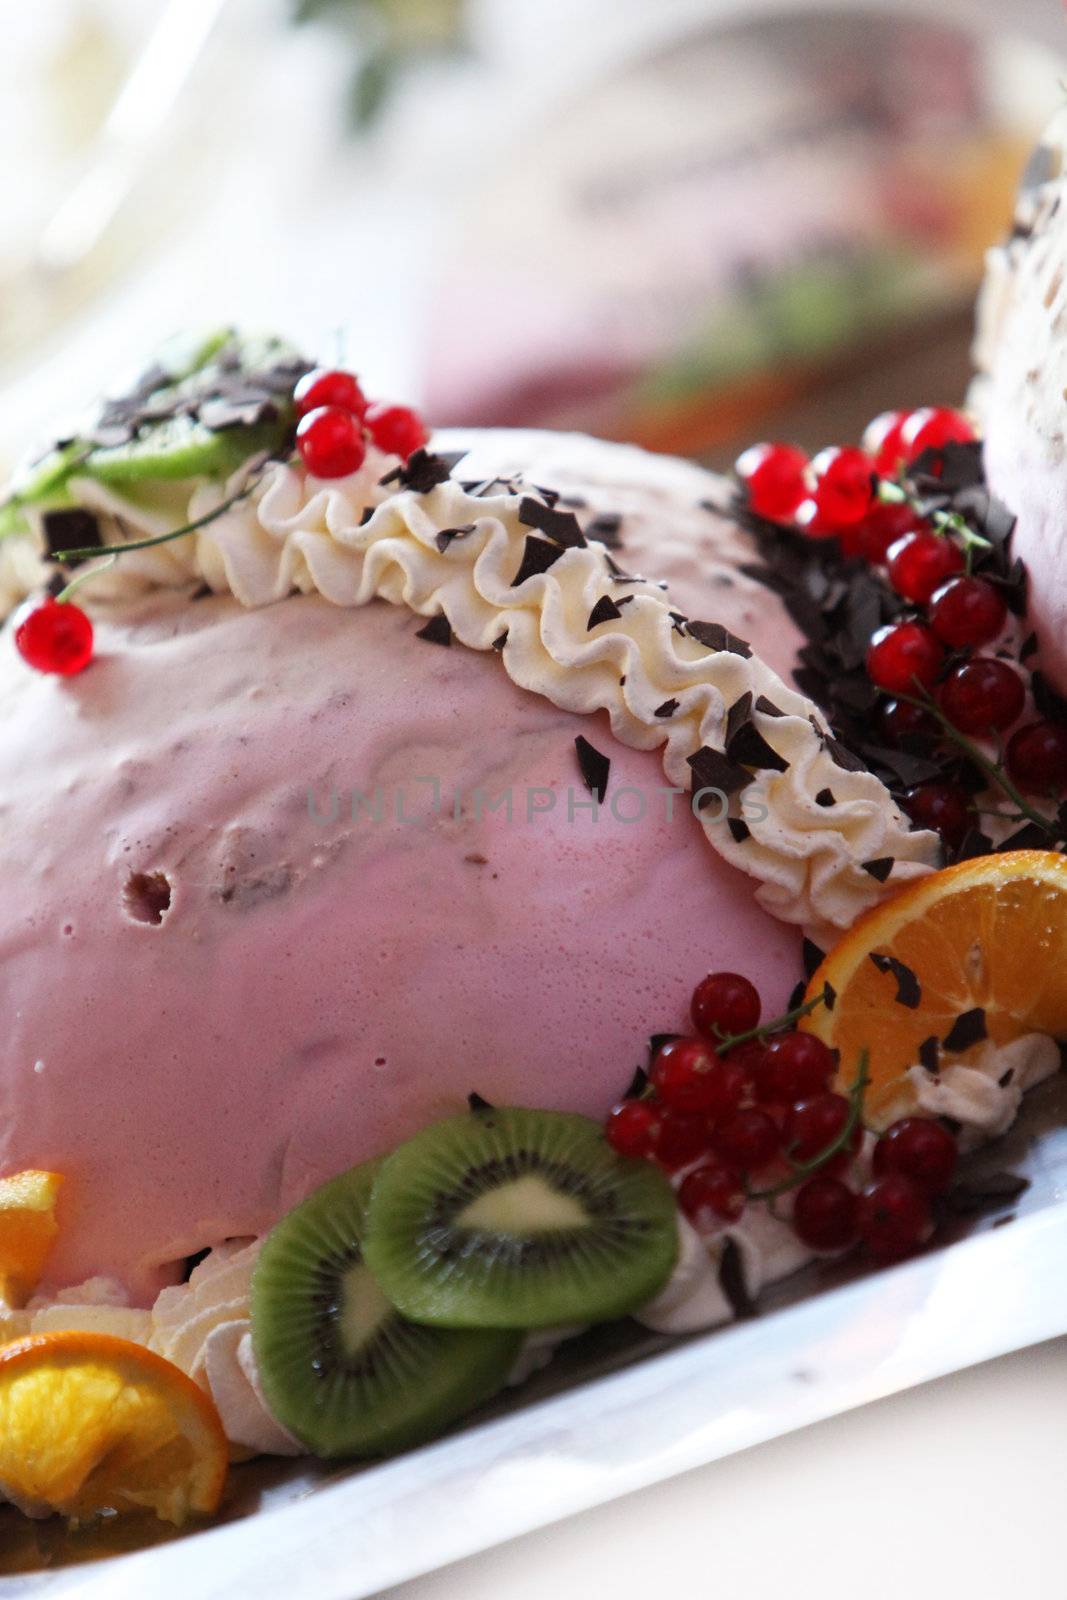 Ice cream with fruit - closeup